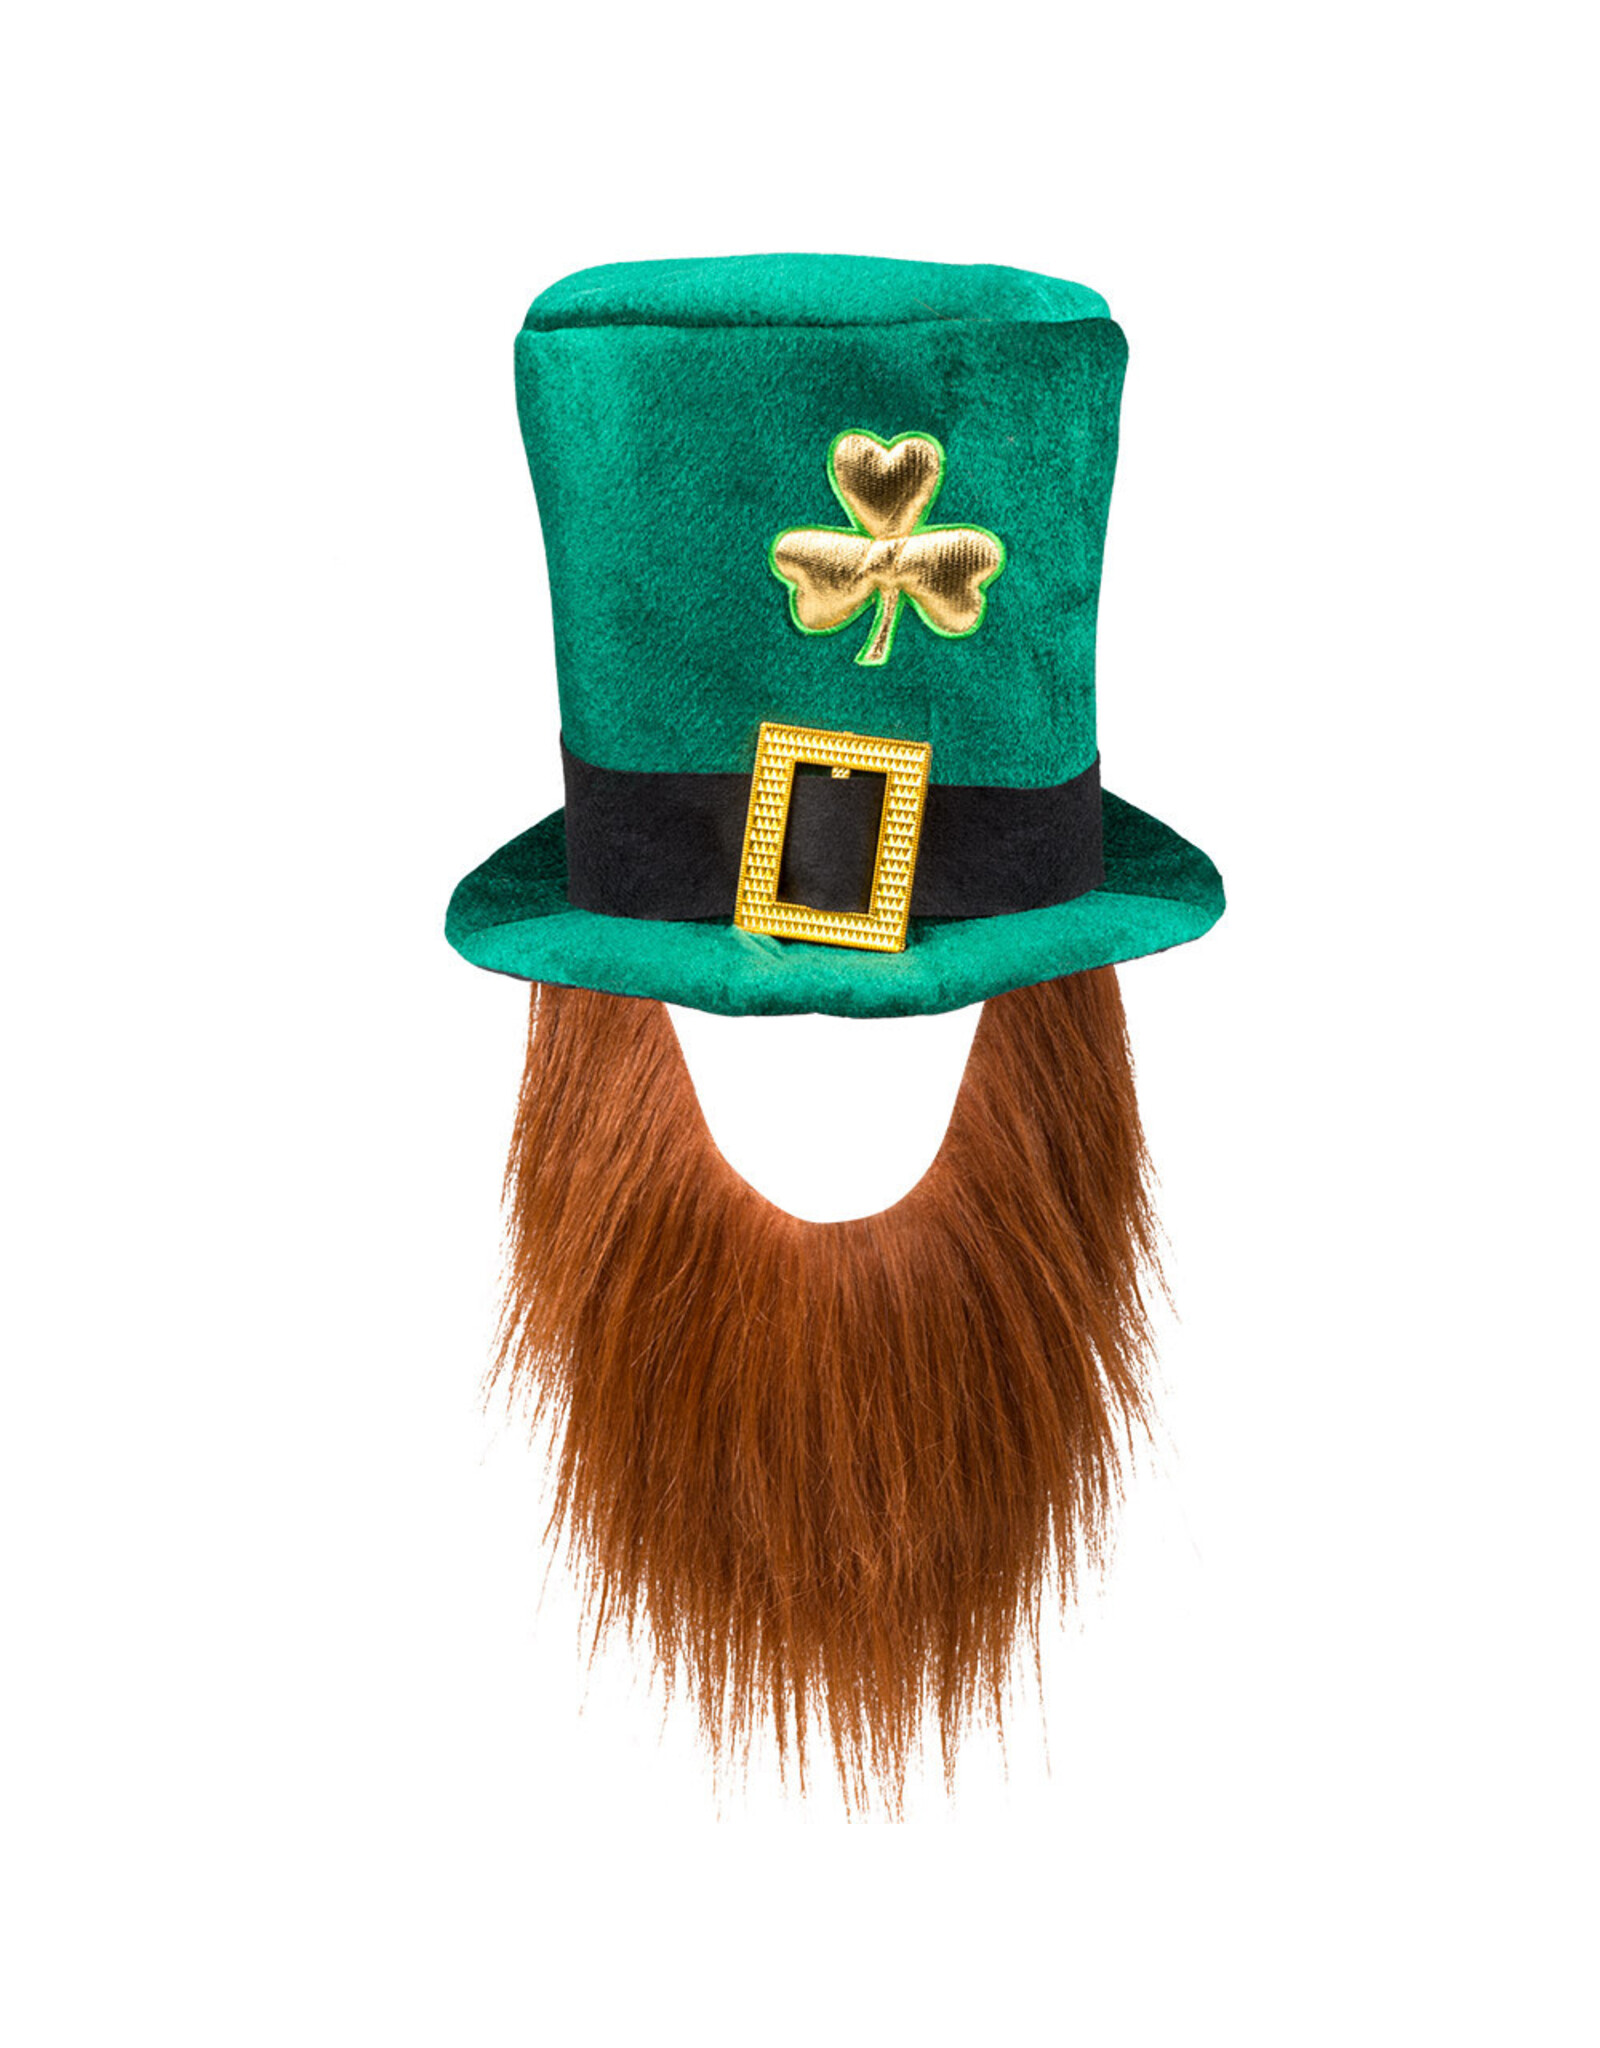 Boland hoed + baard Leprachaun (St Patrick's day)